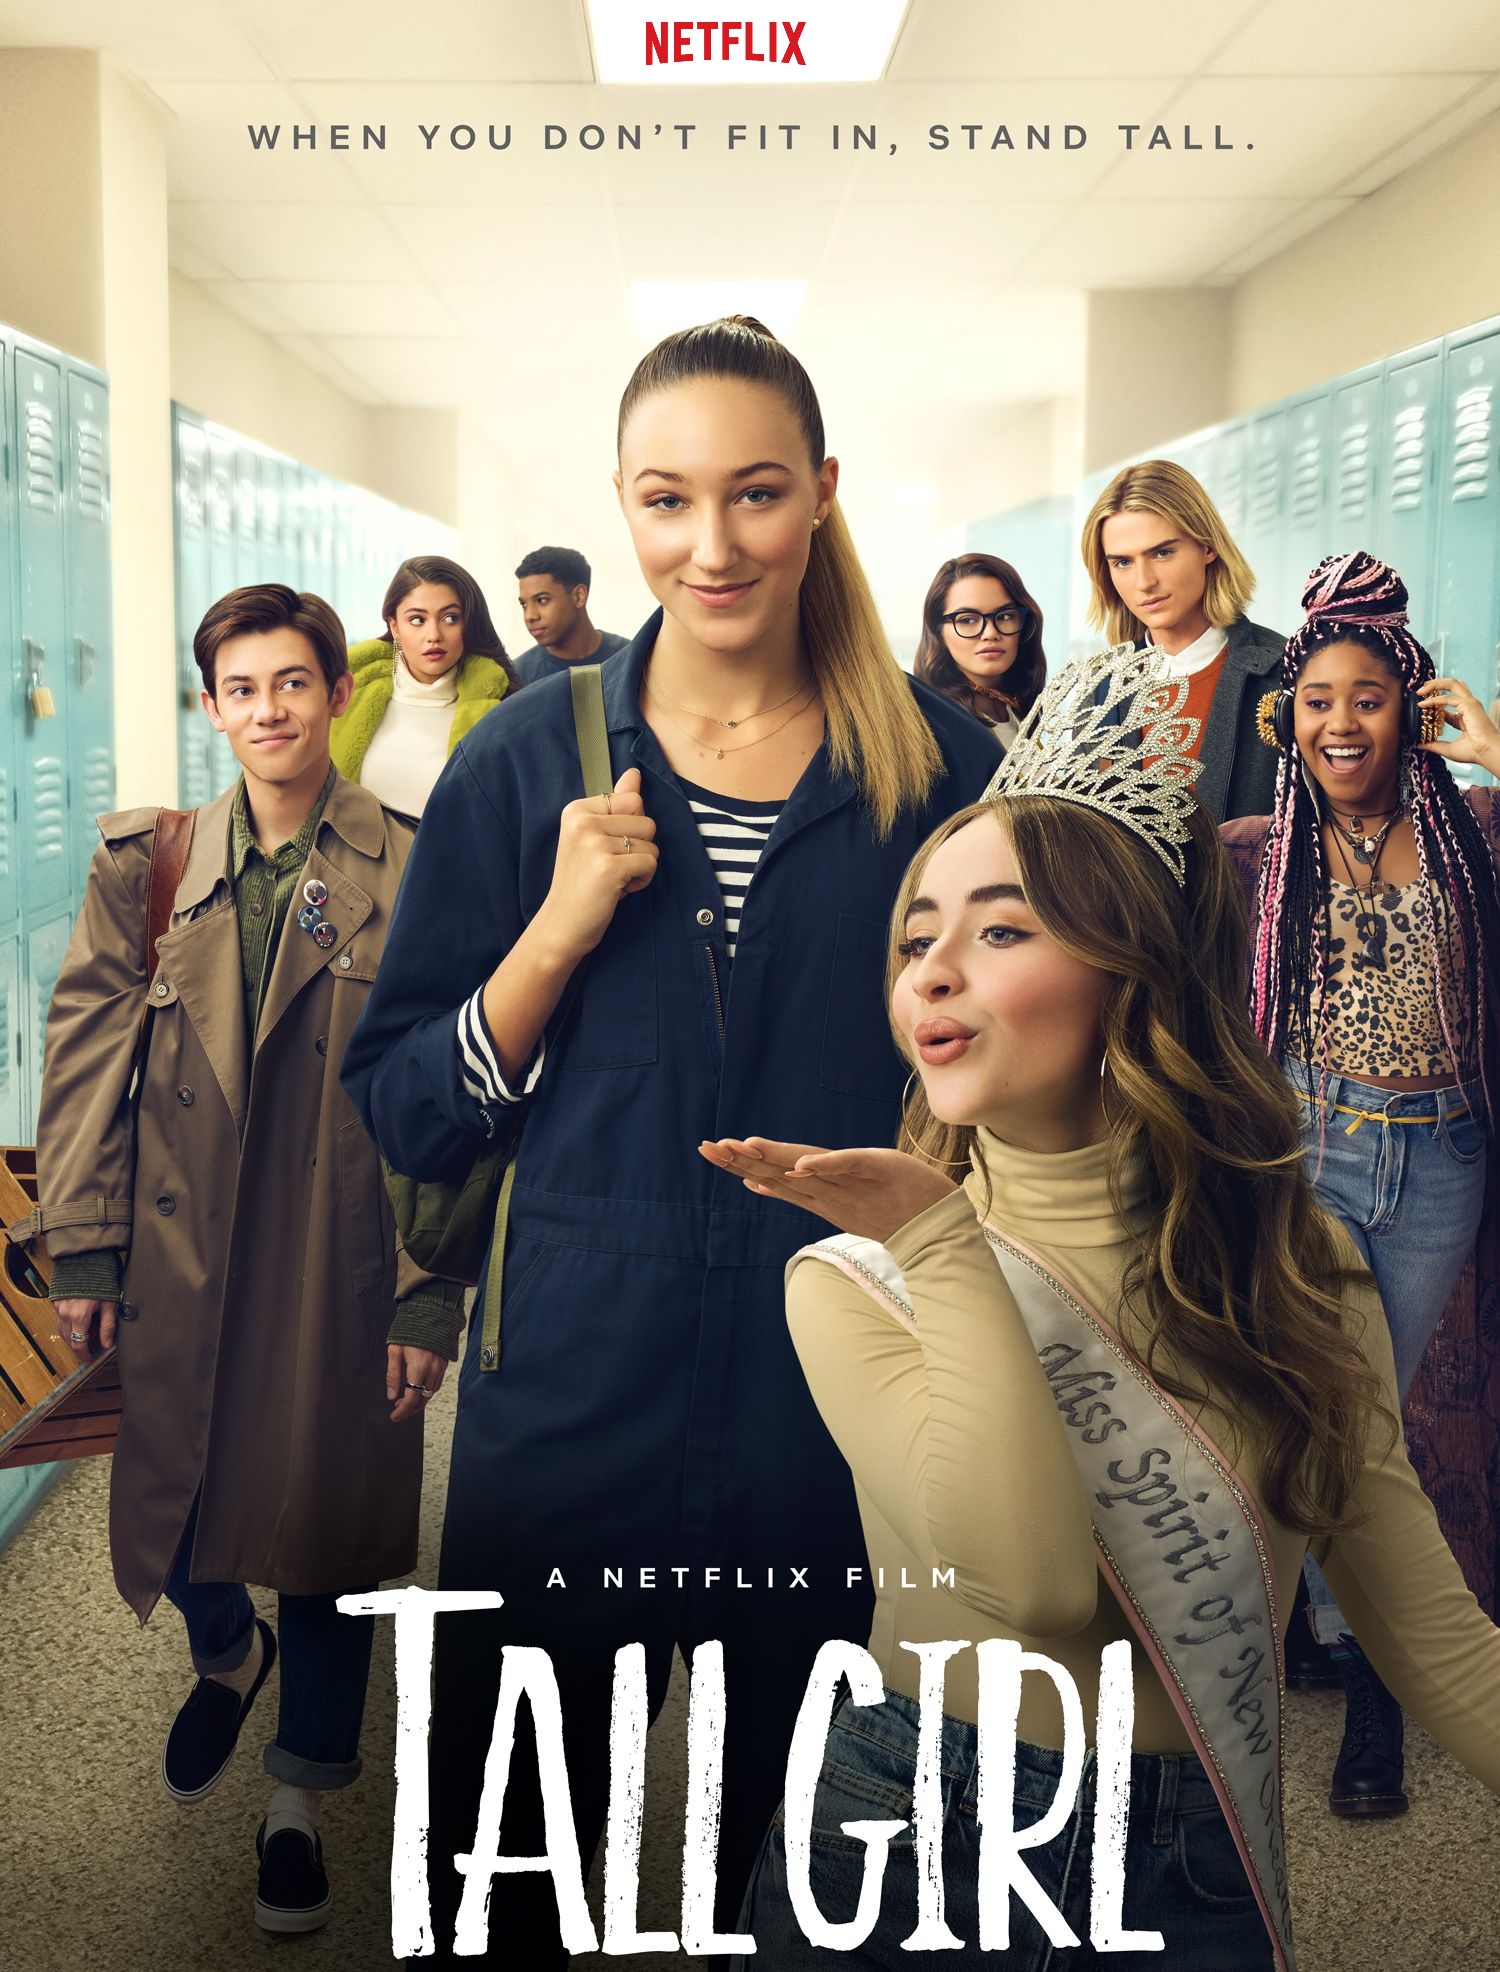 Is “Tall Girl 2” on Netflix